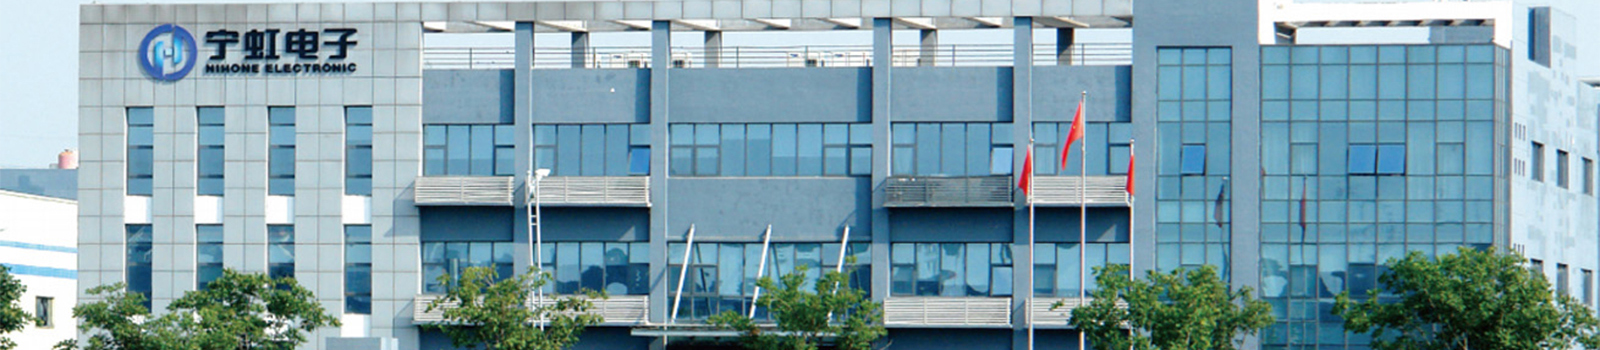 Suzhou Nihone Electronic Technology Co., Ltd.